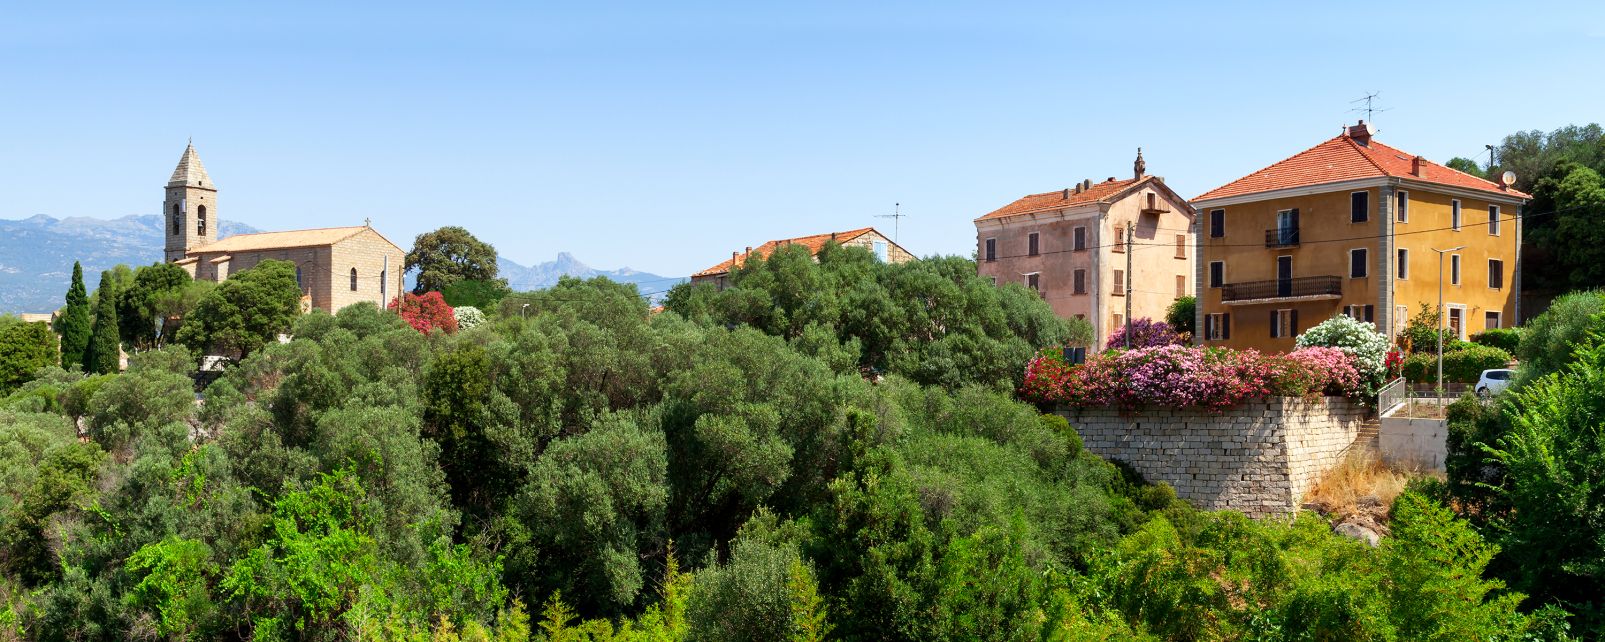 Figari, Korsika, Frankreich